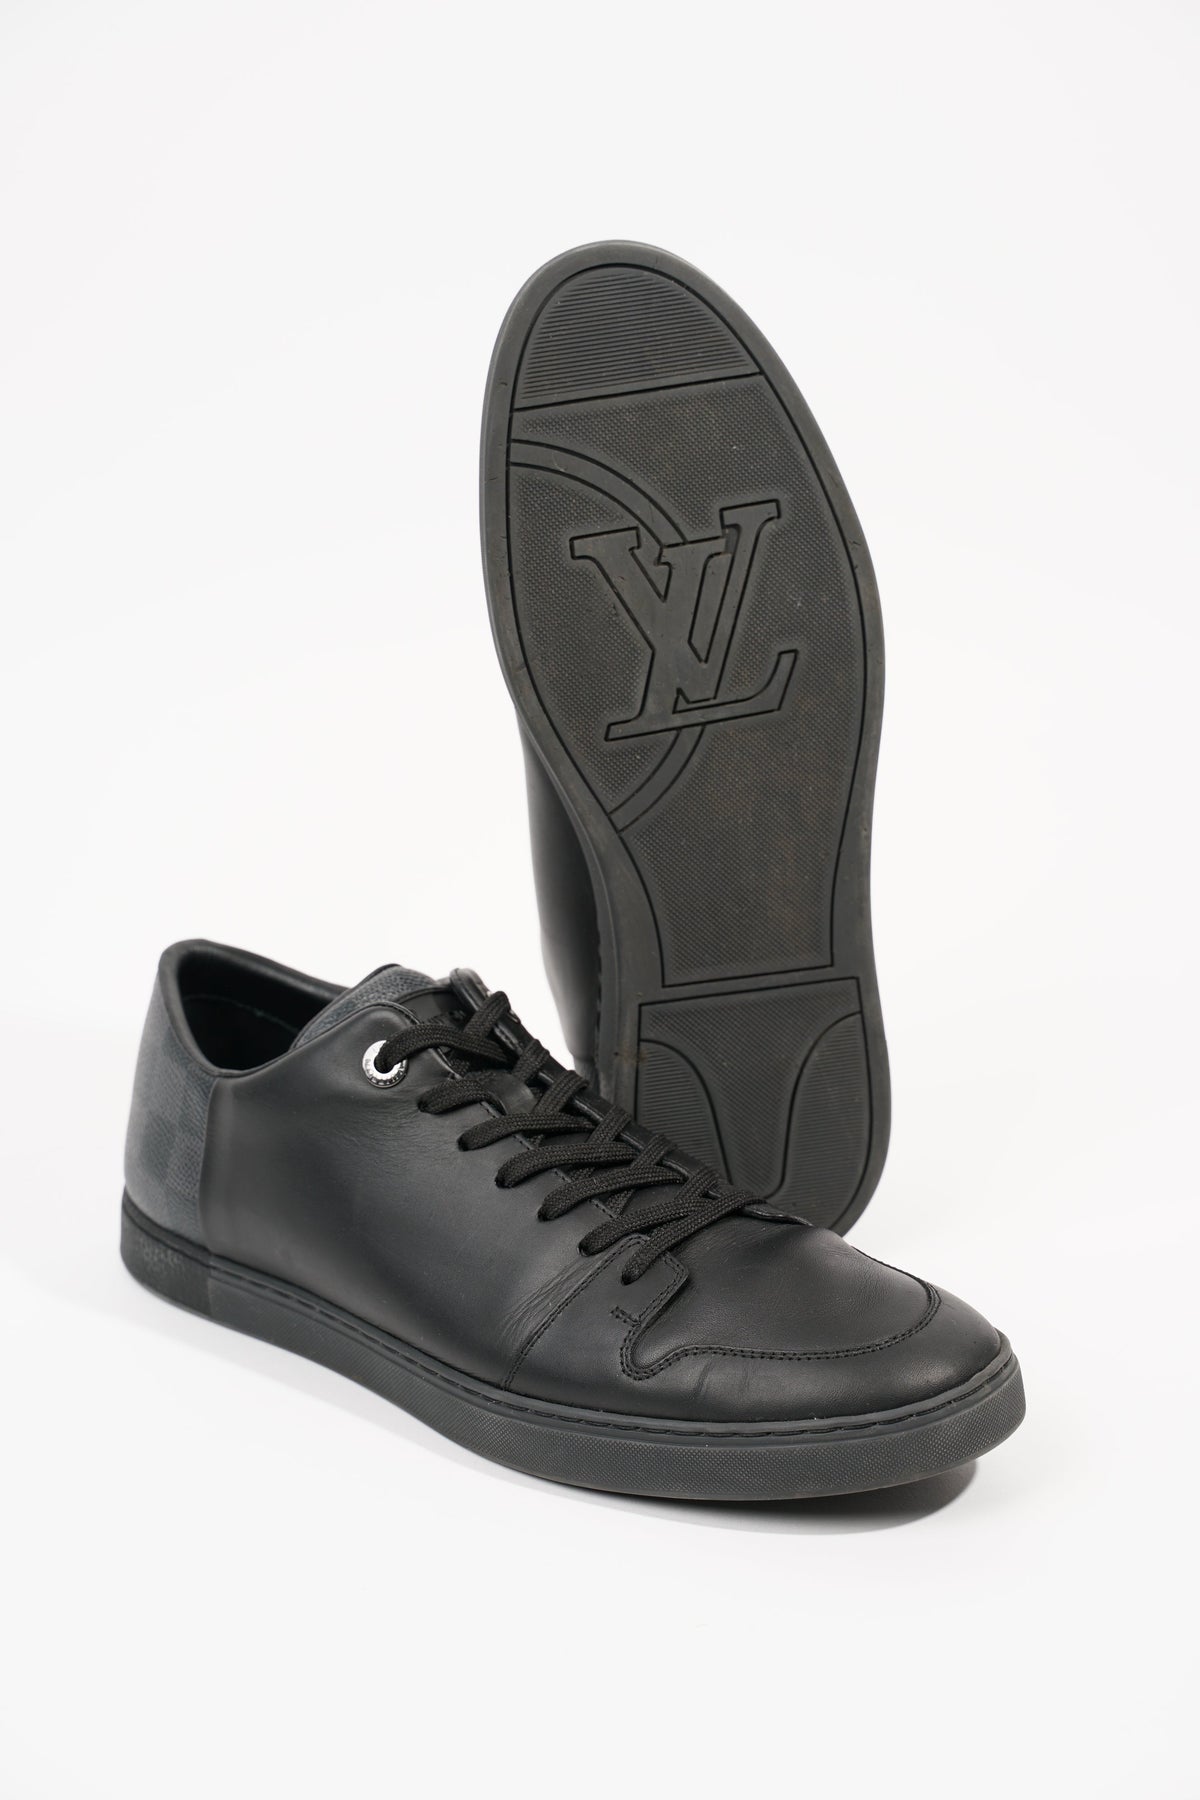 LOUIS VUITTON damier sneakers trainers UK10.5 / US11.5 /44.5 shoes